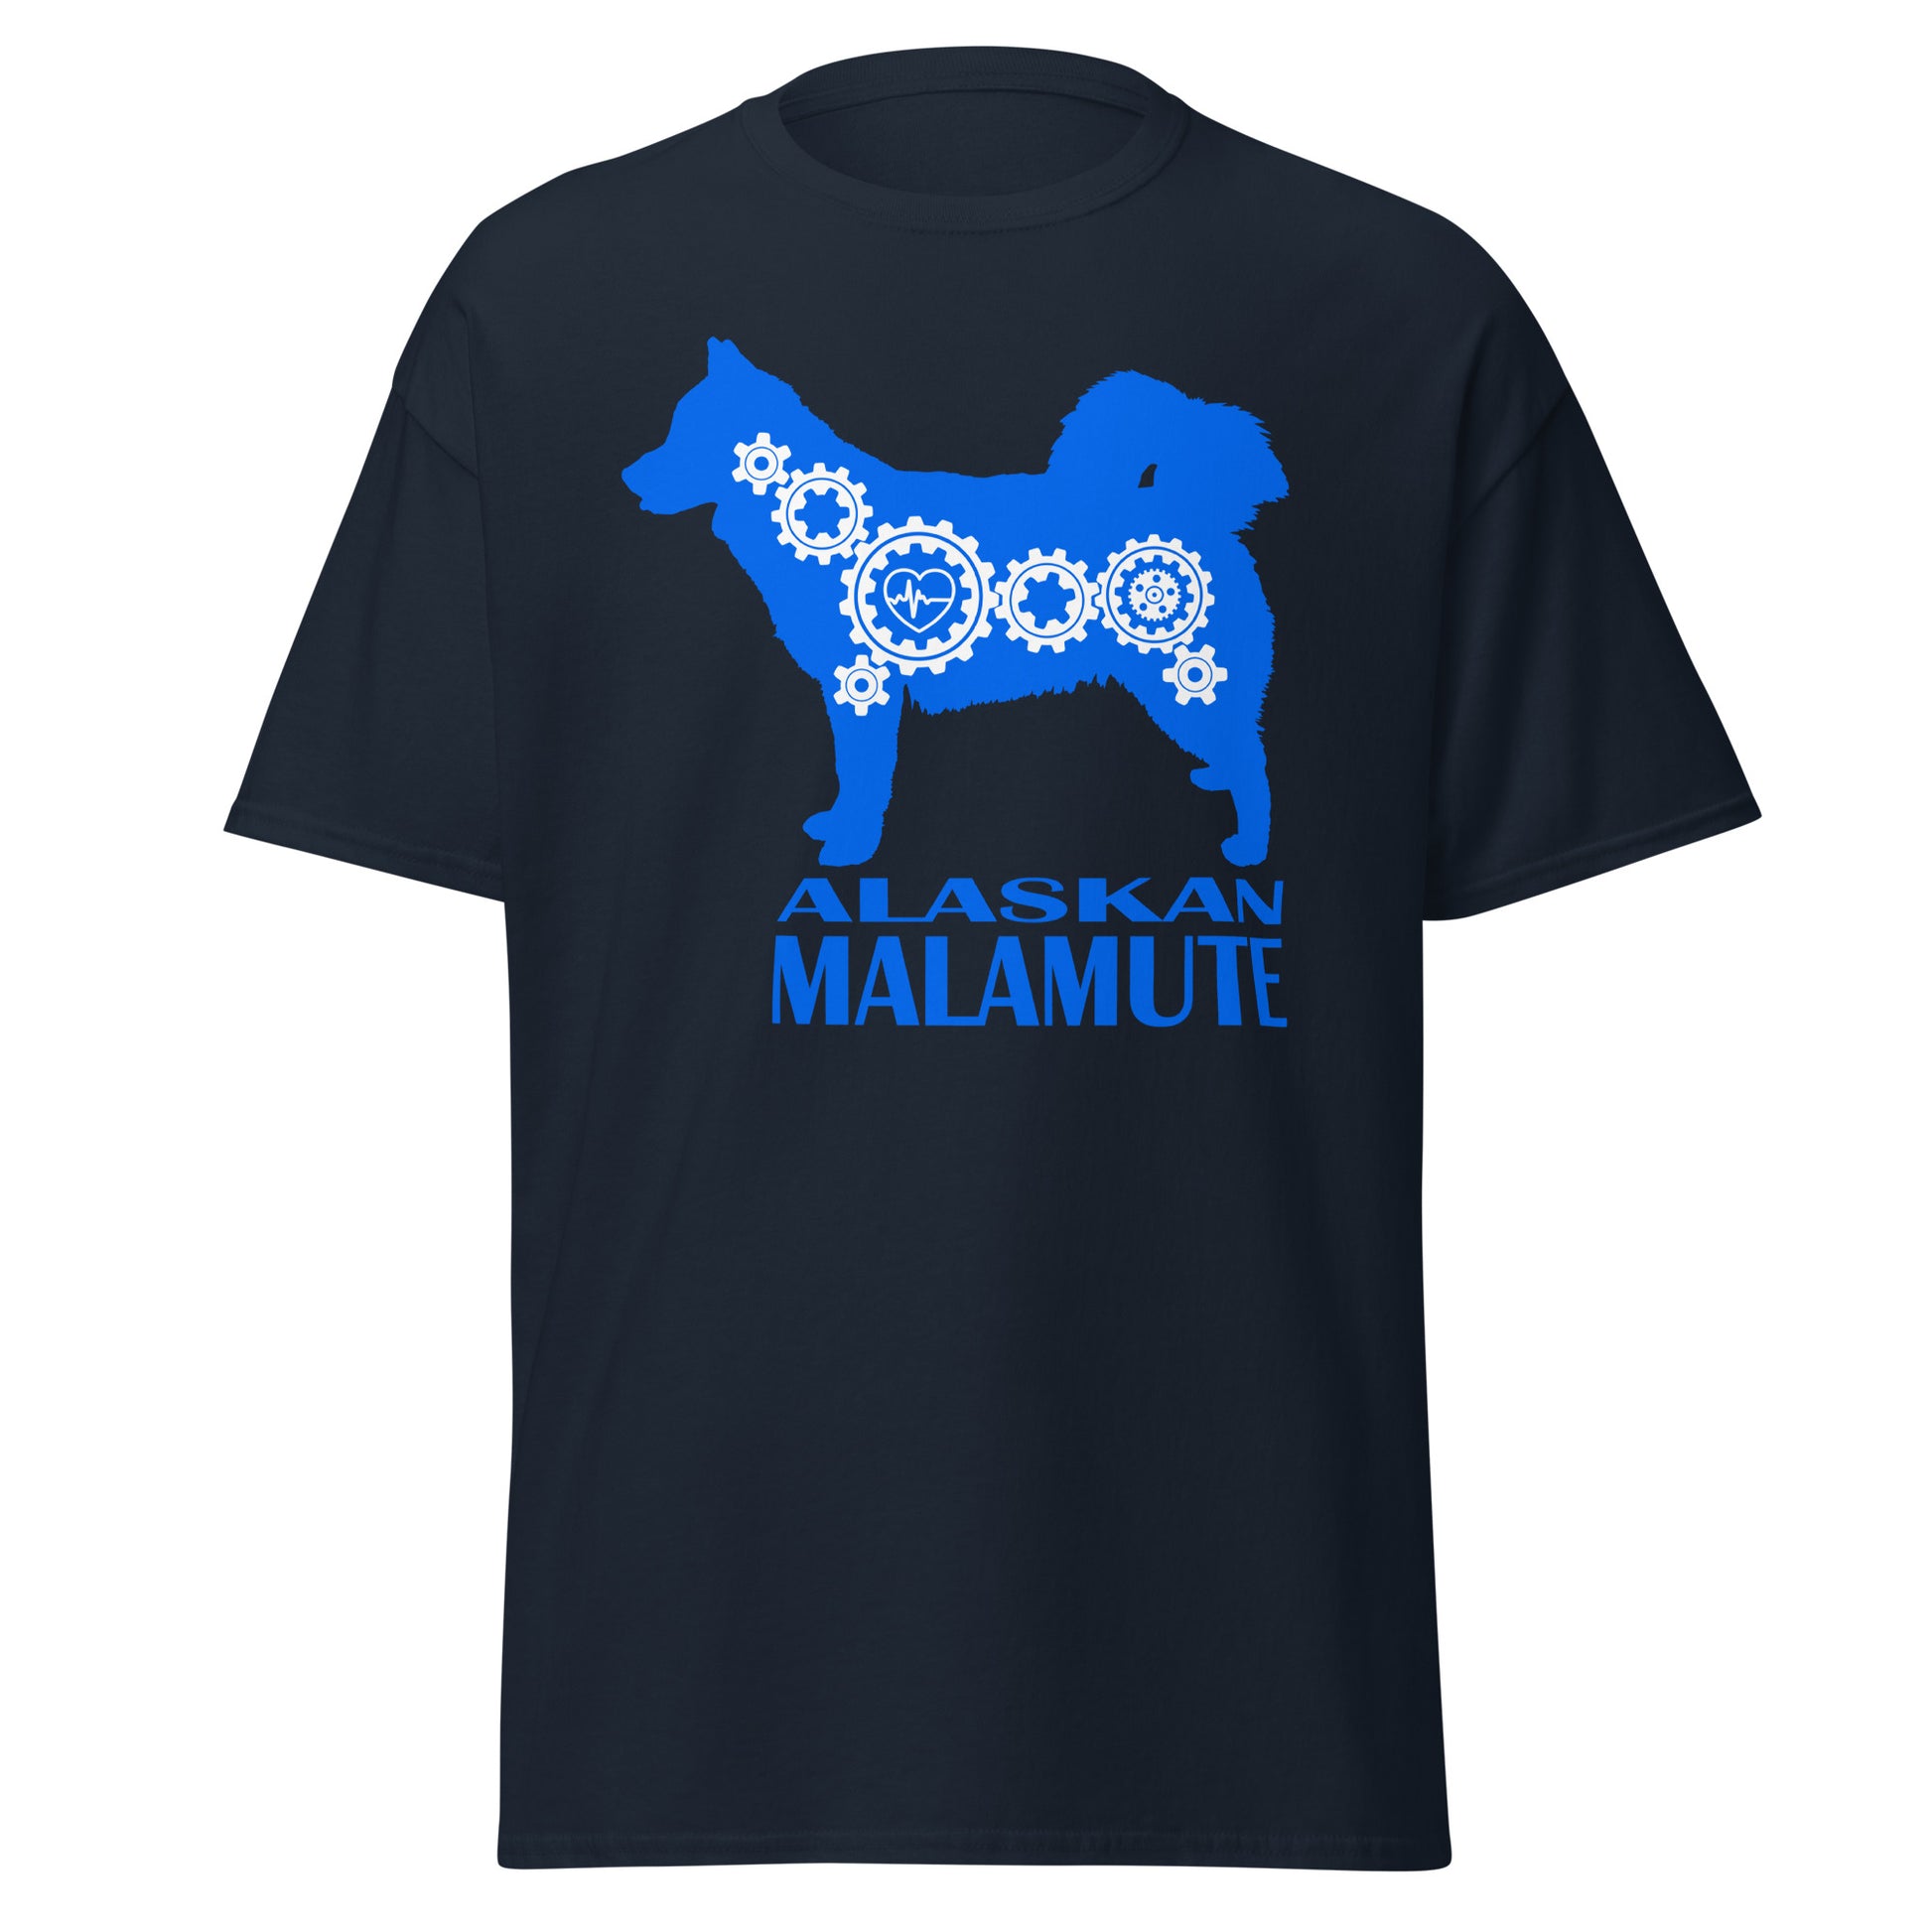 Alaskan Malamute Bionic men’s navy t-shirt by Dog Artistry.